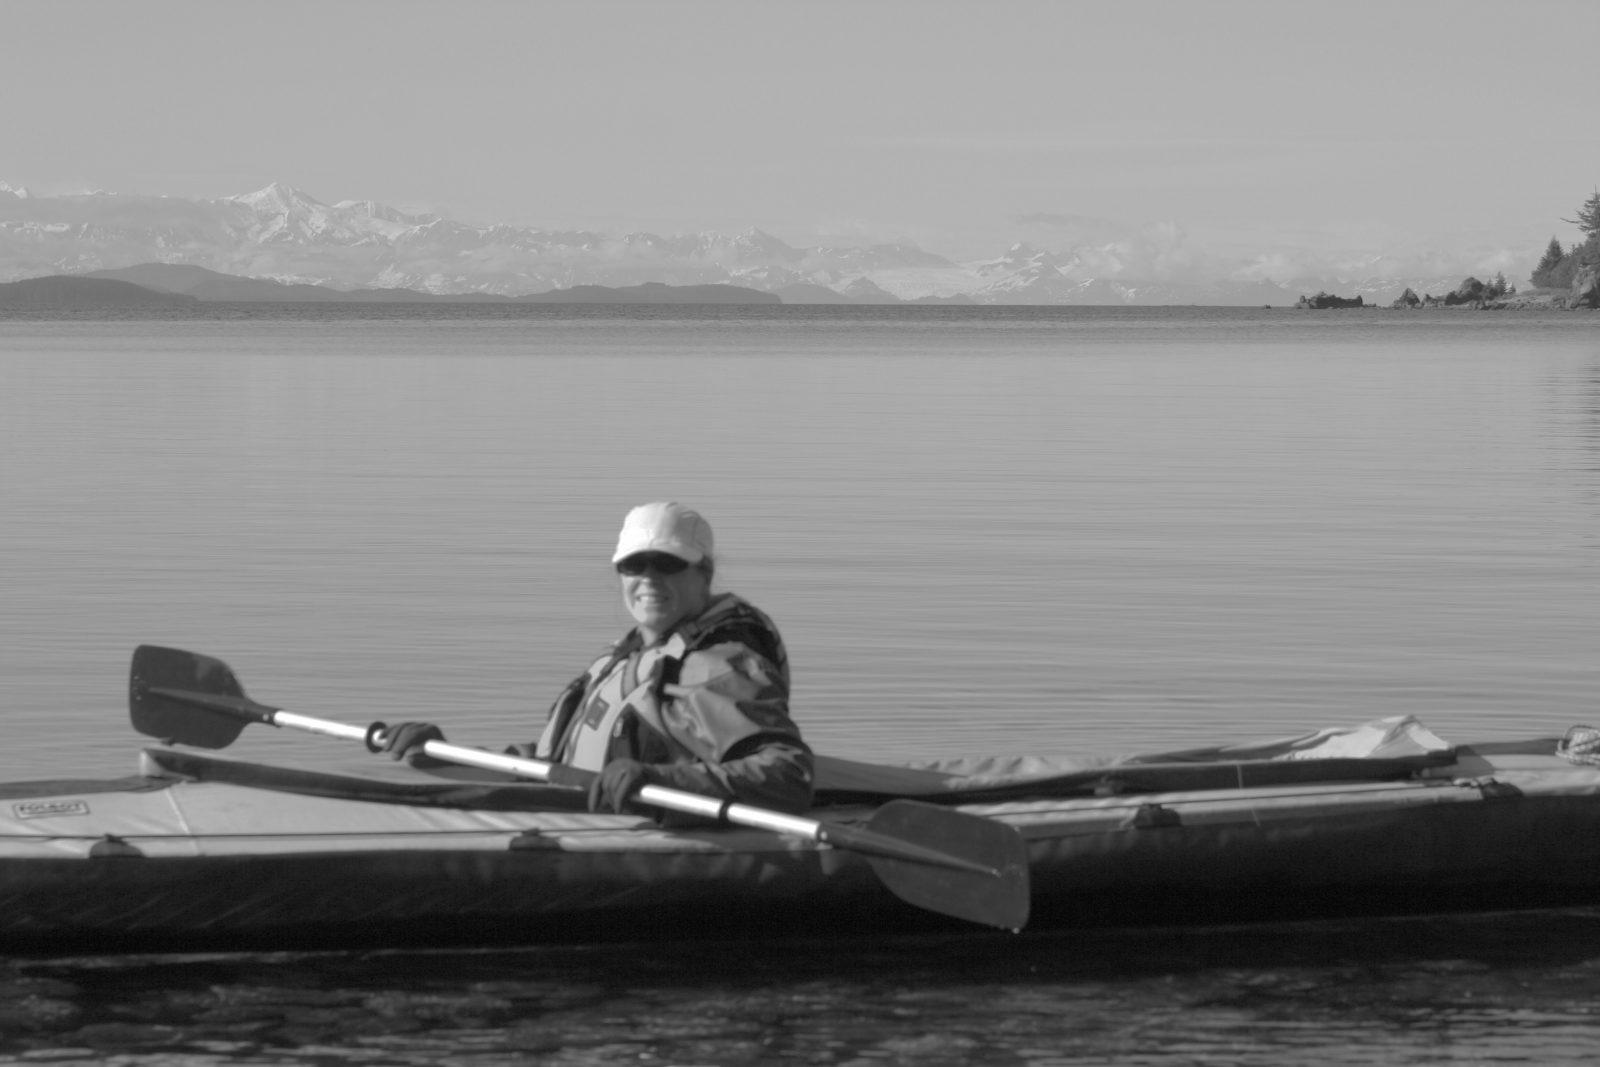 Valerie in a kayak in Prince William Sound, 2012.